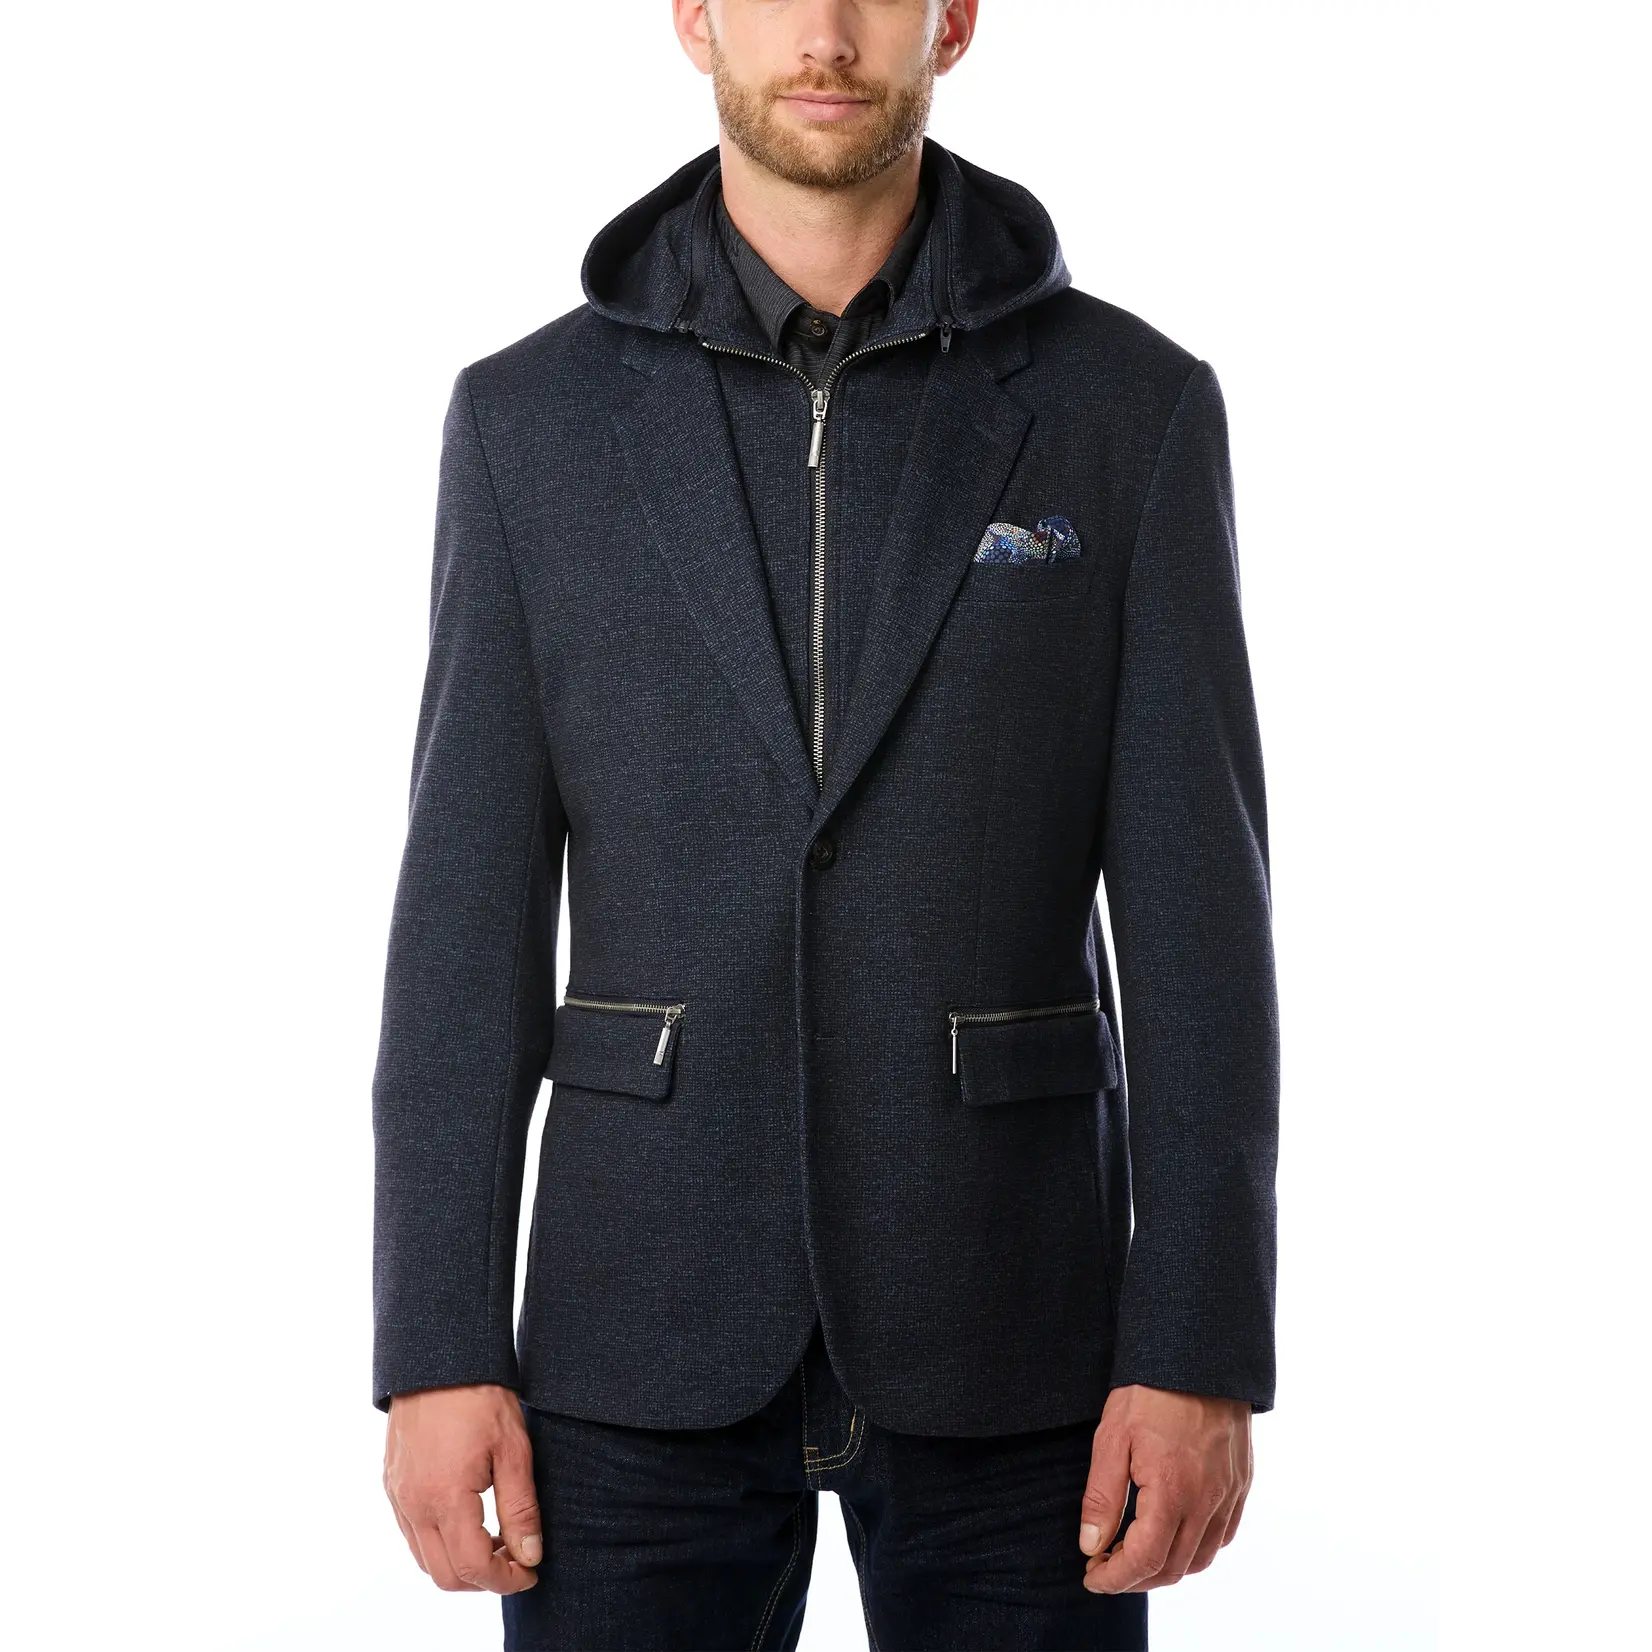 Vincent D'Amerique Vincent D'Amerique mens multi functional blazer/sport coat/dinner jacket, dress coat with zip off collar and hood, jackets, coats